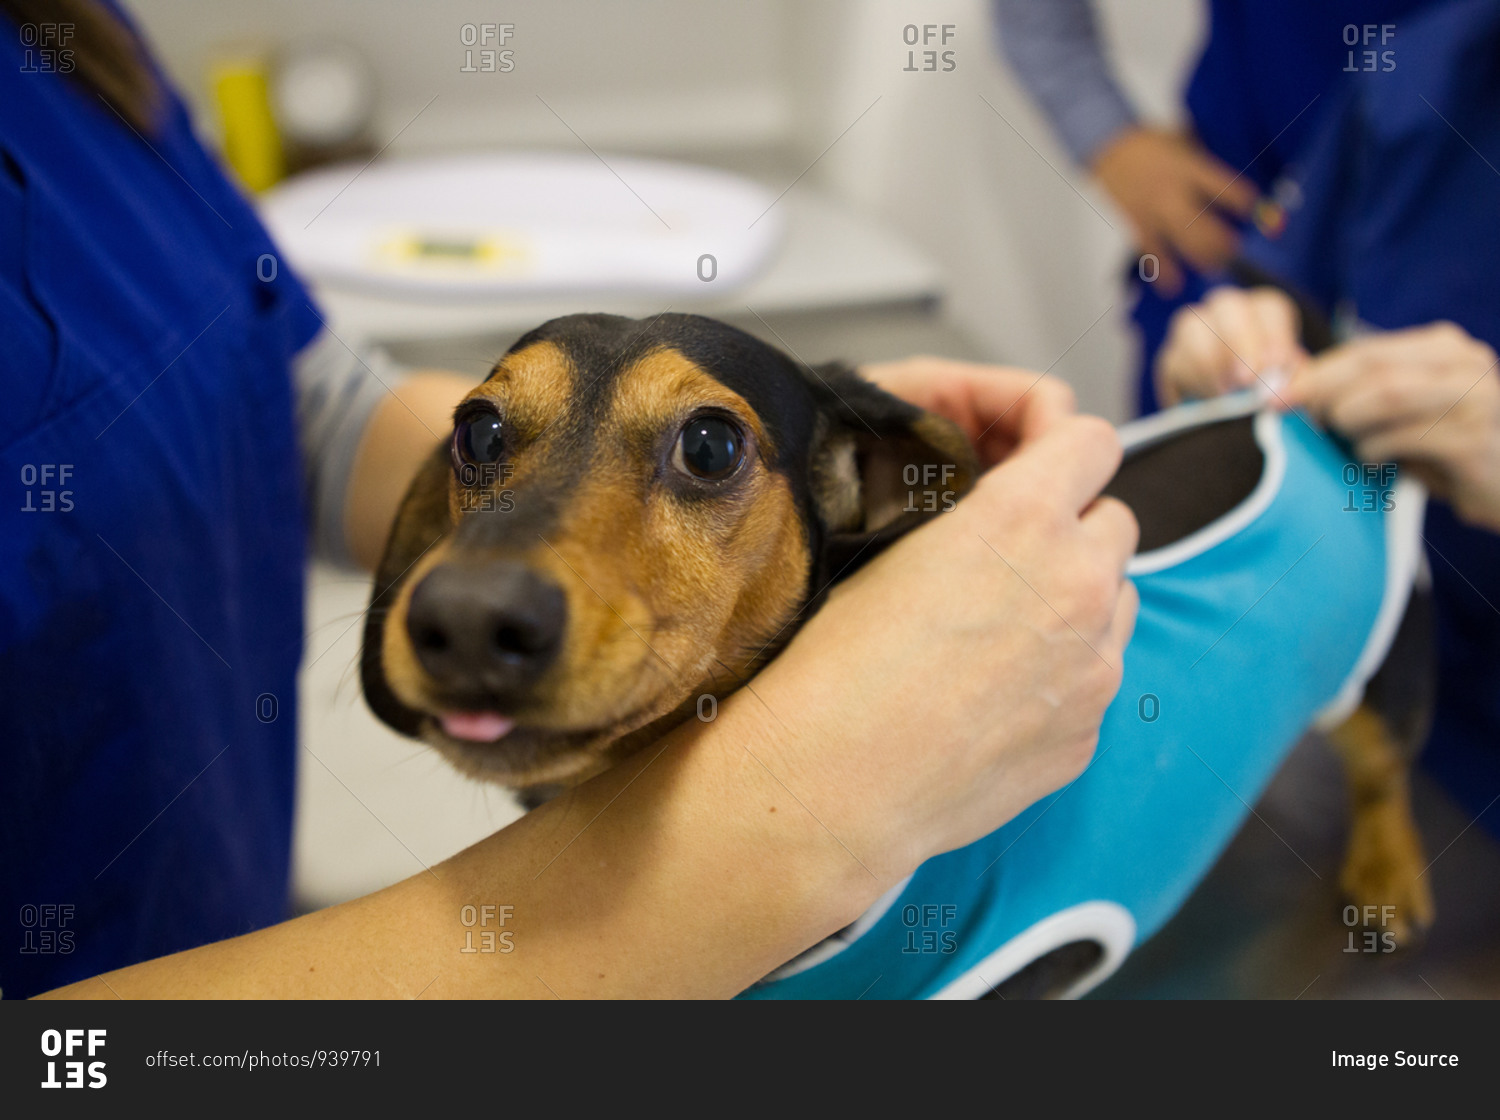 Veterinarian and nurses preparing dog for treatment